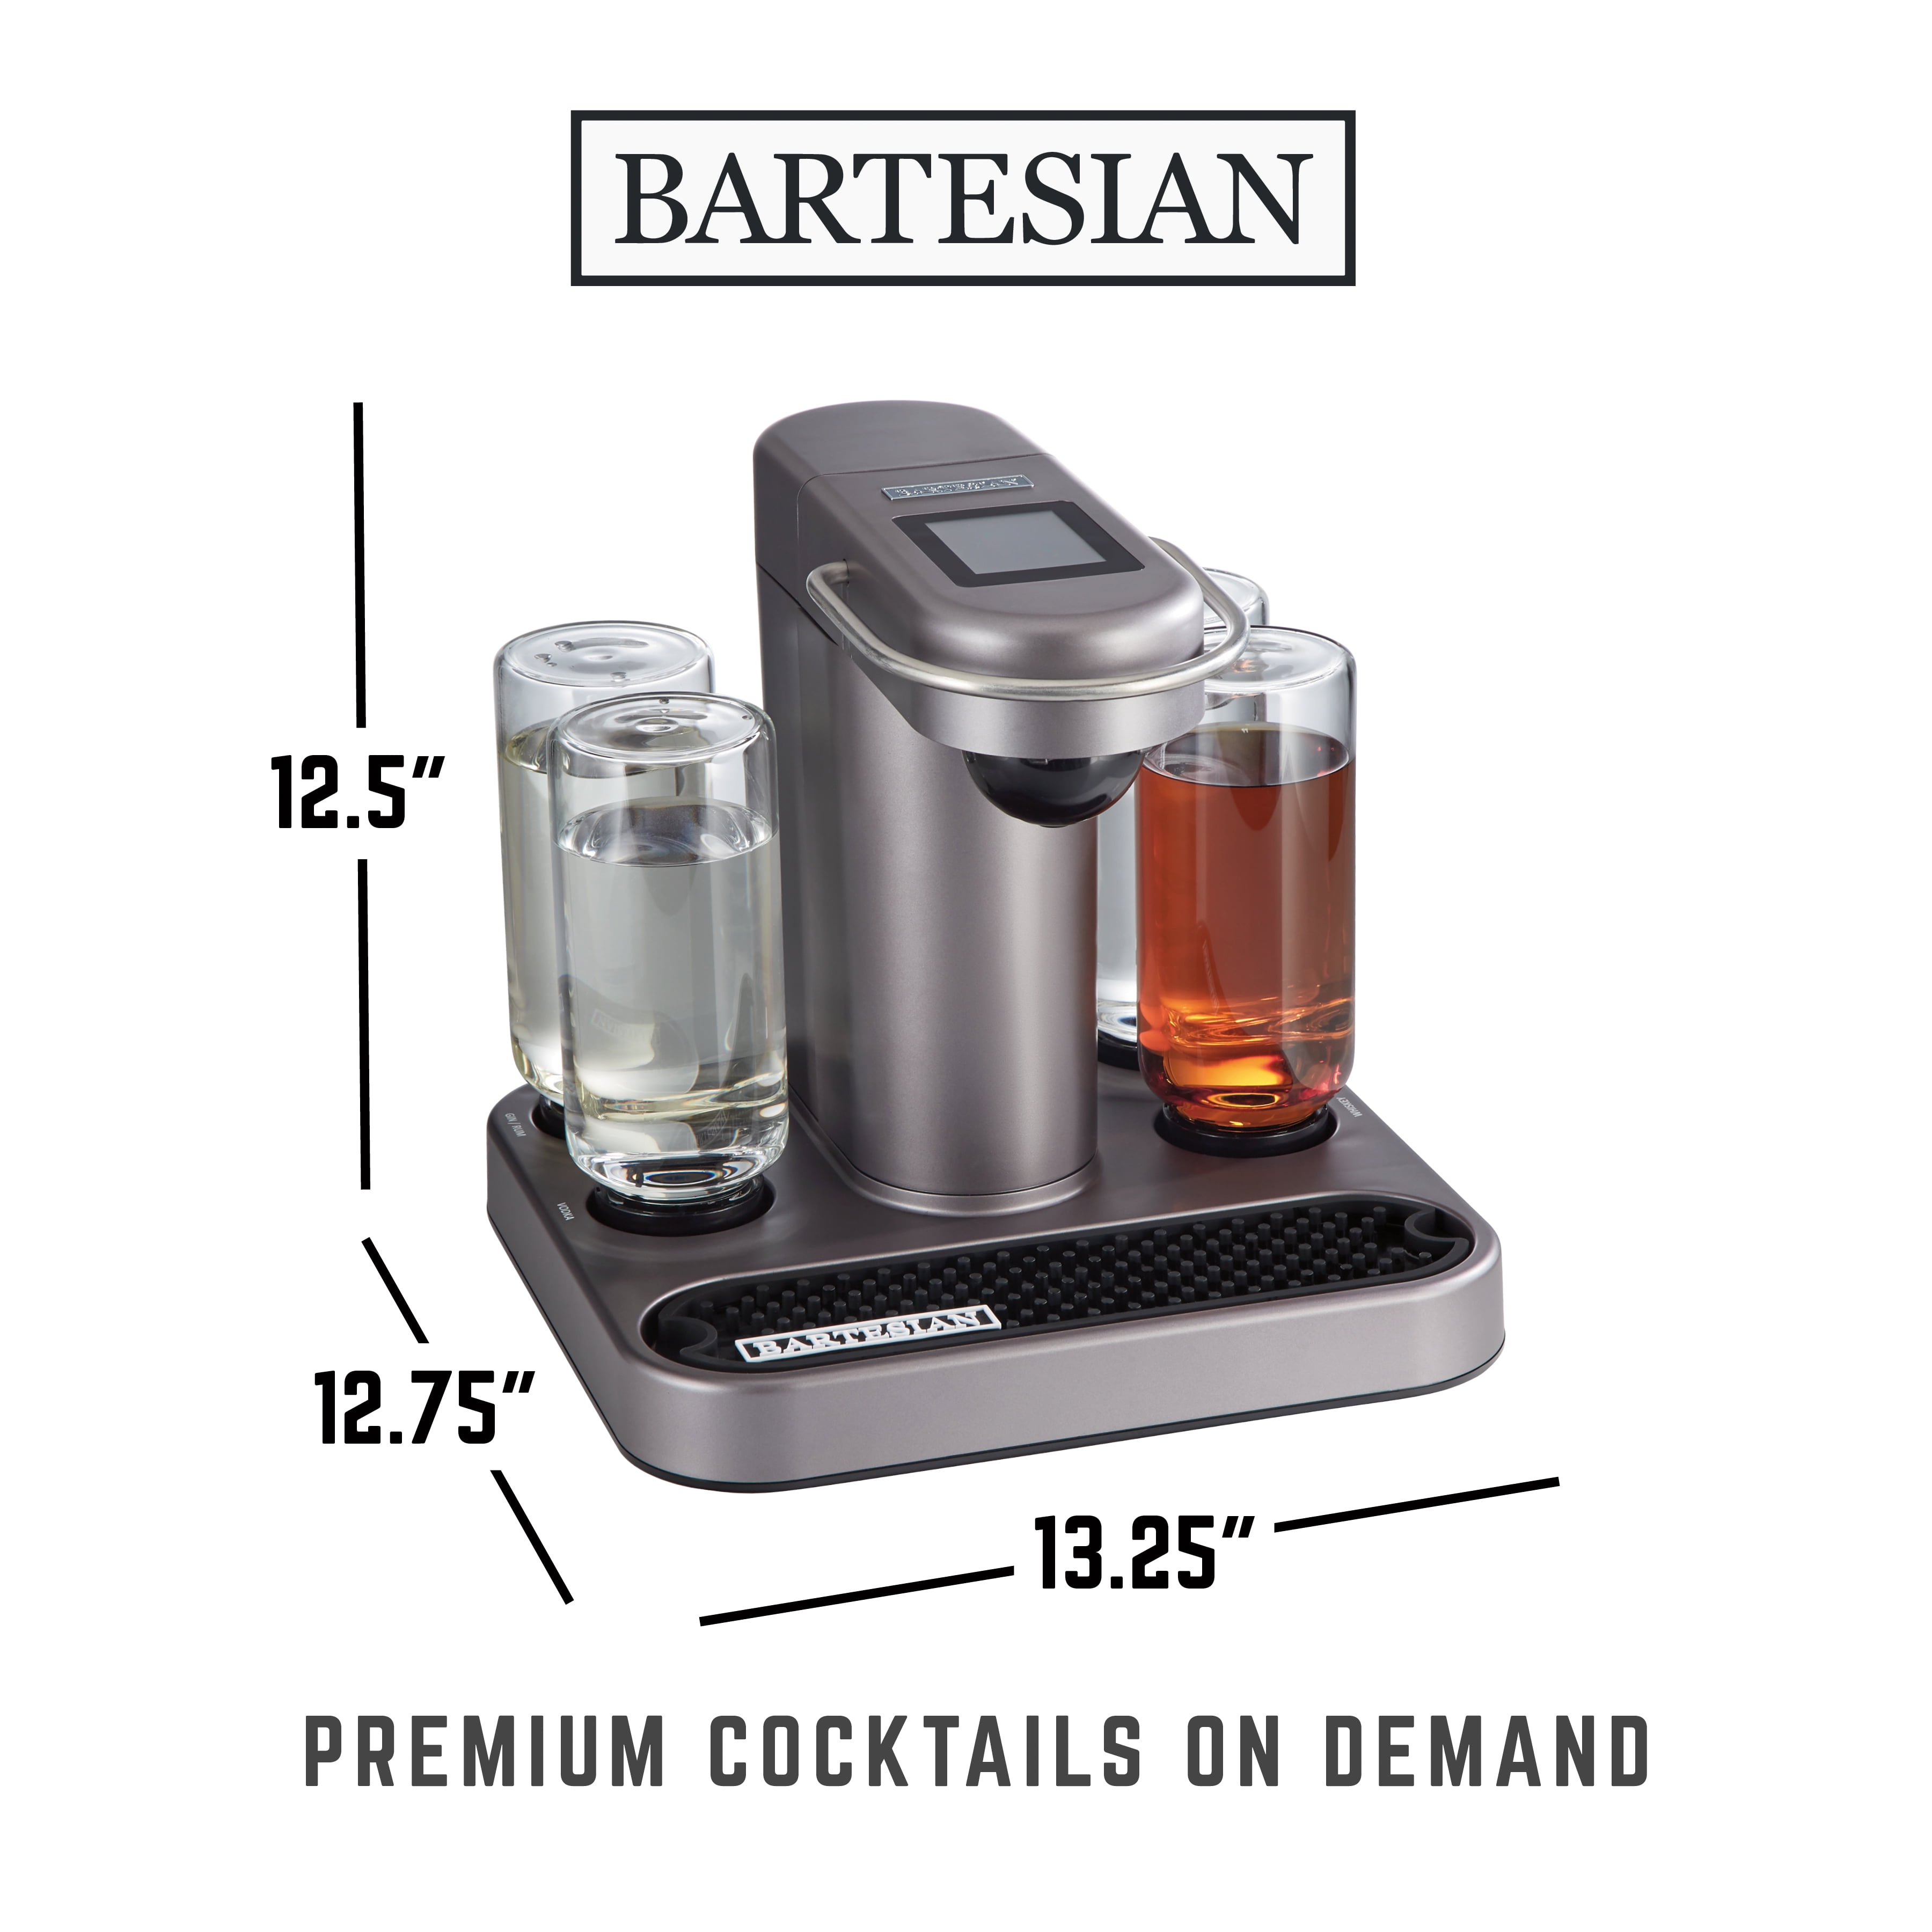 Bartesian Premium Cocktail Machine - 9596920